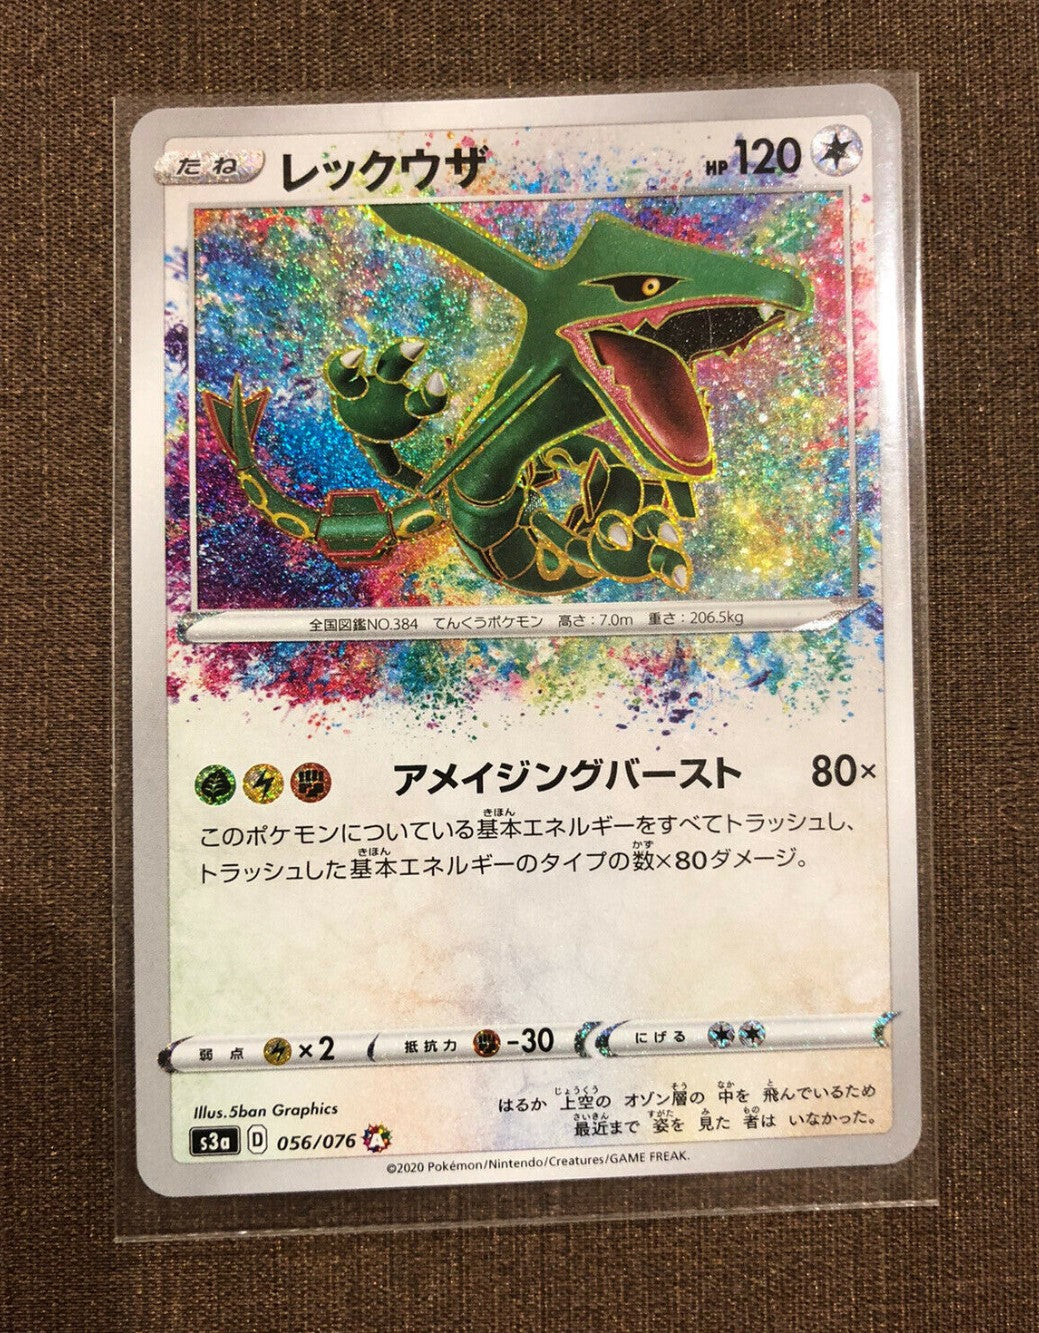 rare legendary pokemon cards